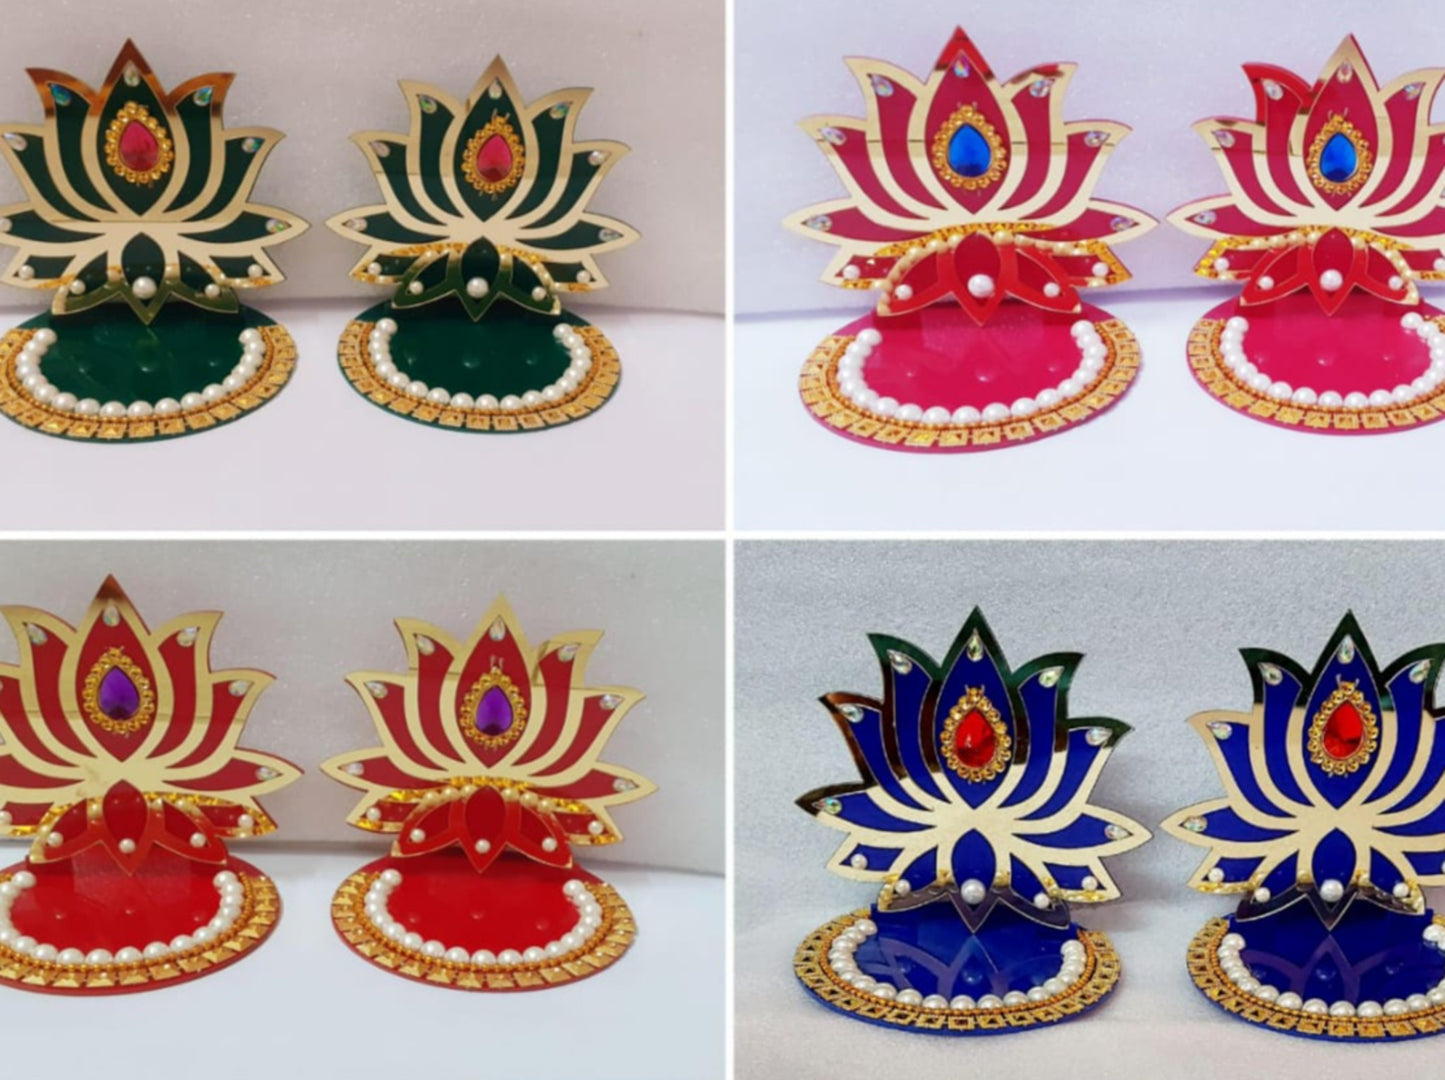 Acrylic Decorated Lotus Diya Stand in pair